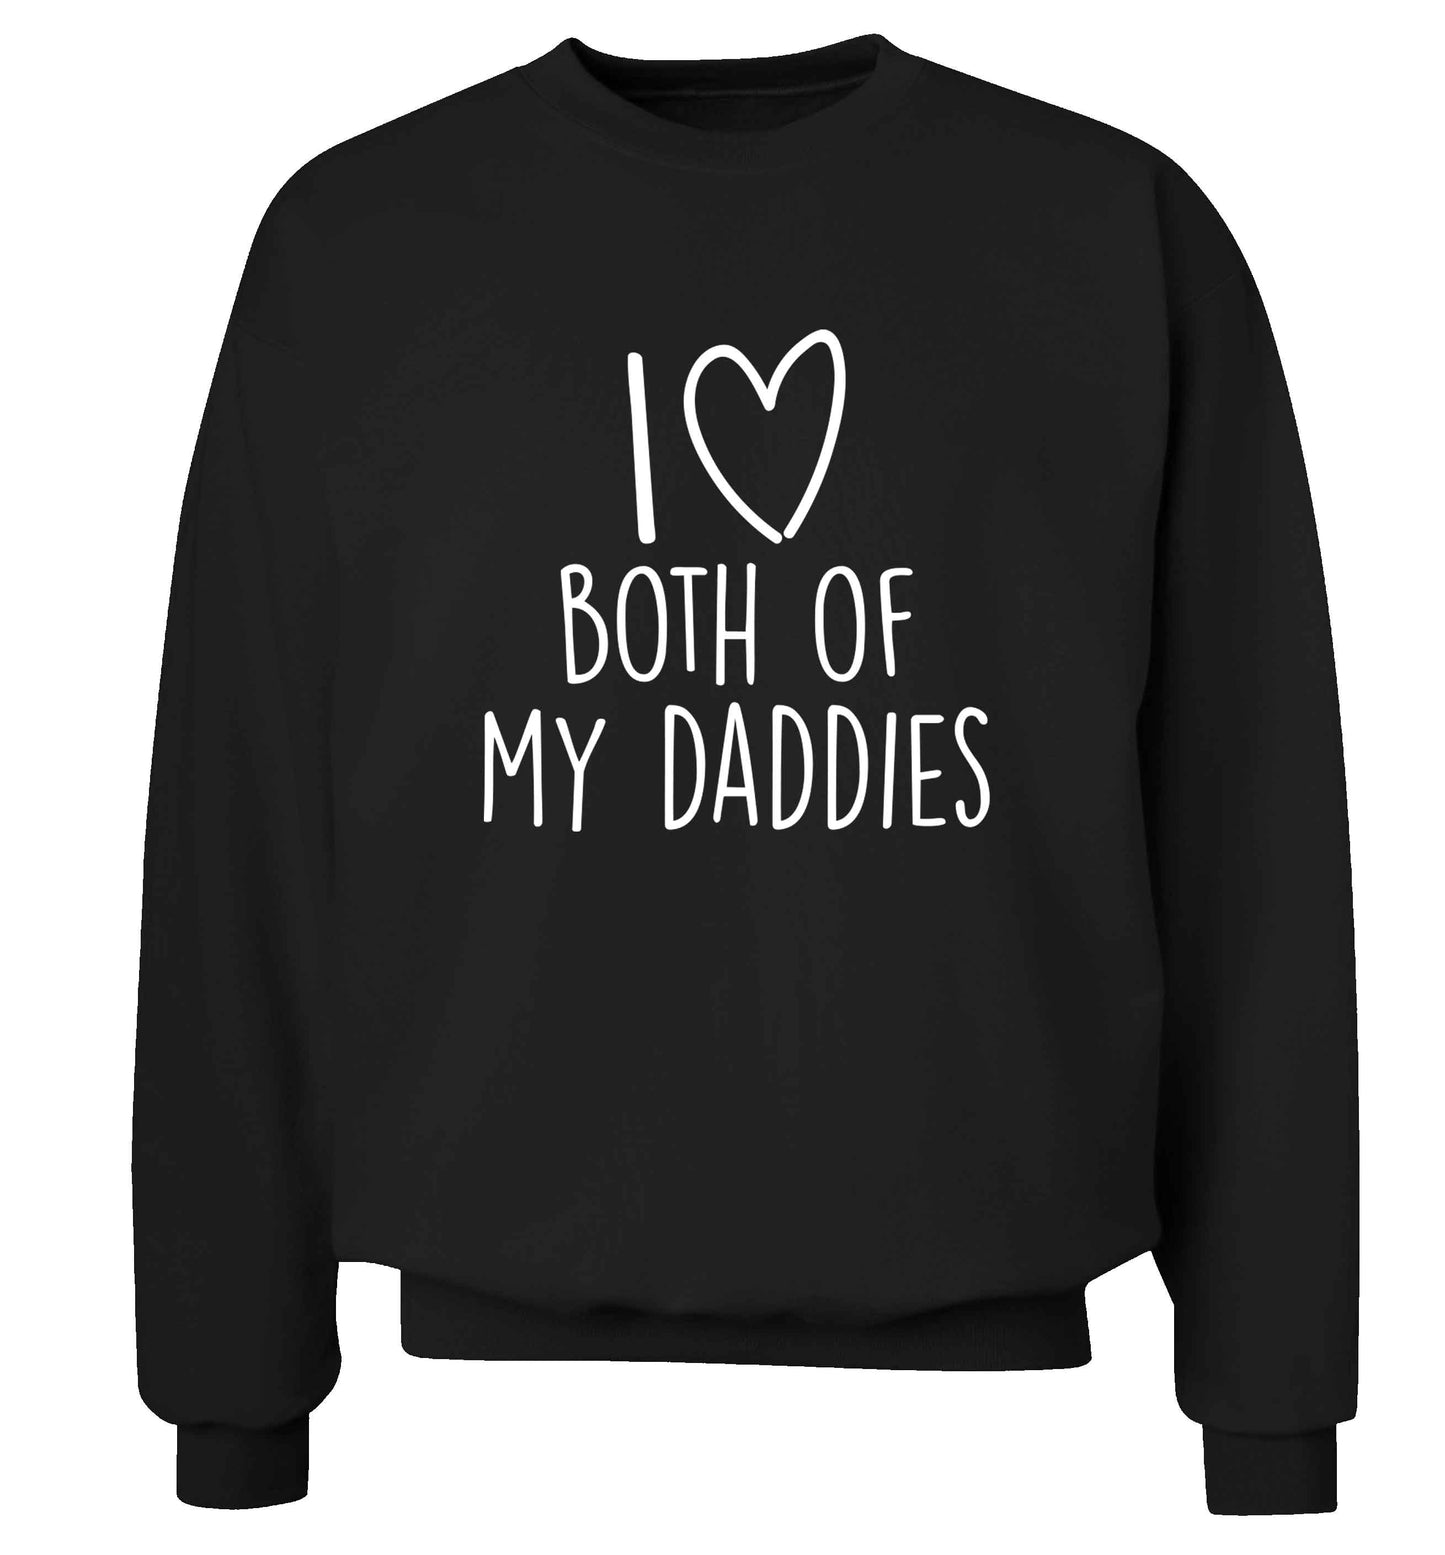 I love both of my daddies adult's unisex black sweater 2XL